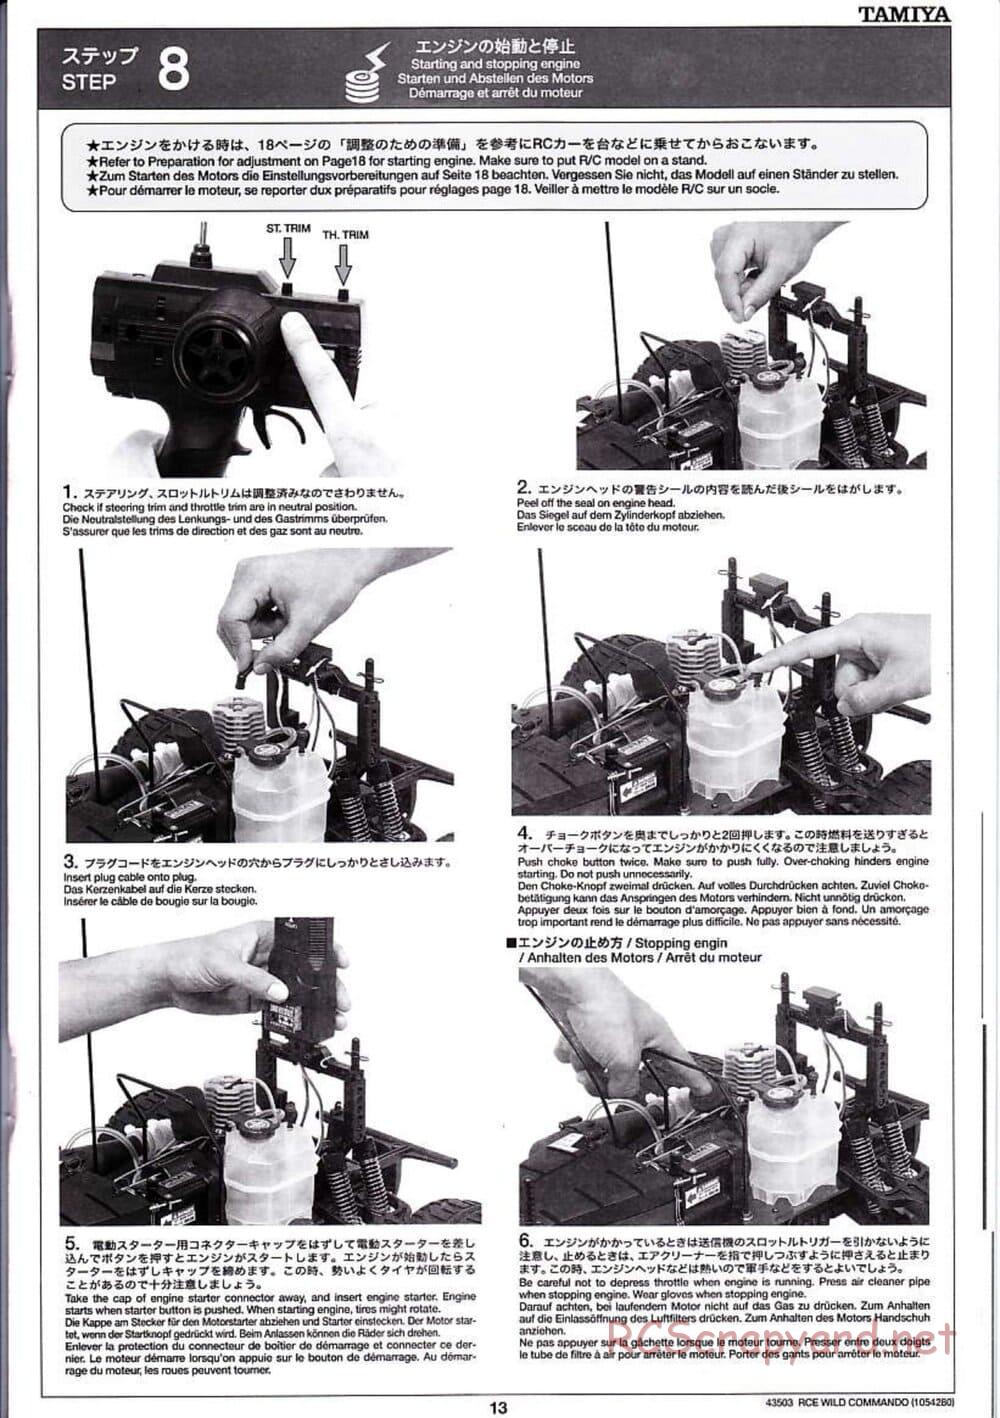 Tamiya - Wild Commando - TGM-02 Chassis - Manual - Page 13